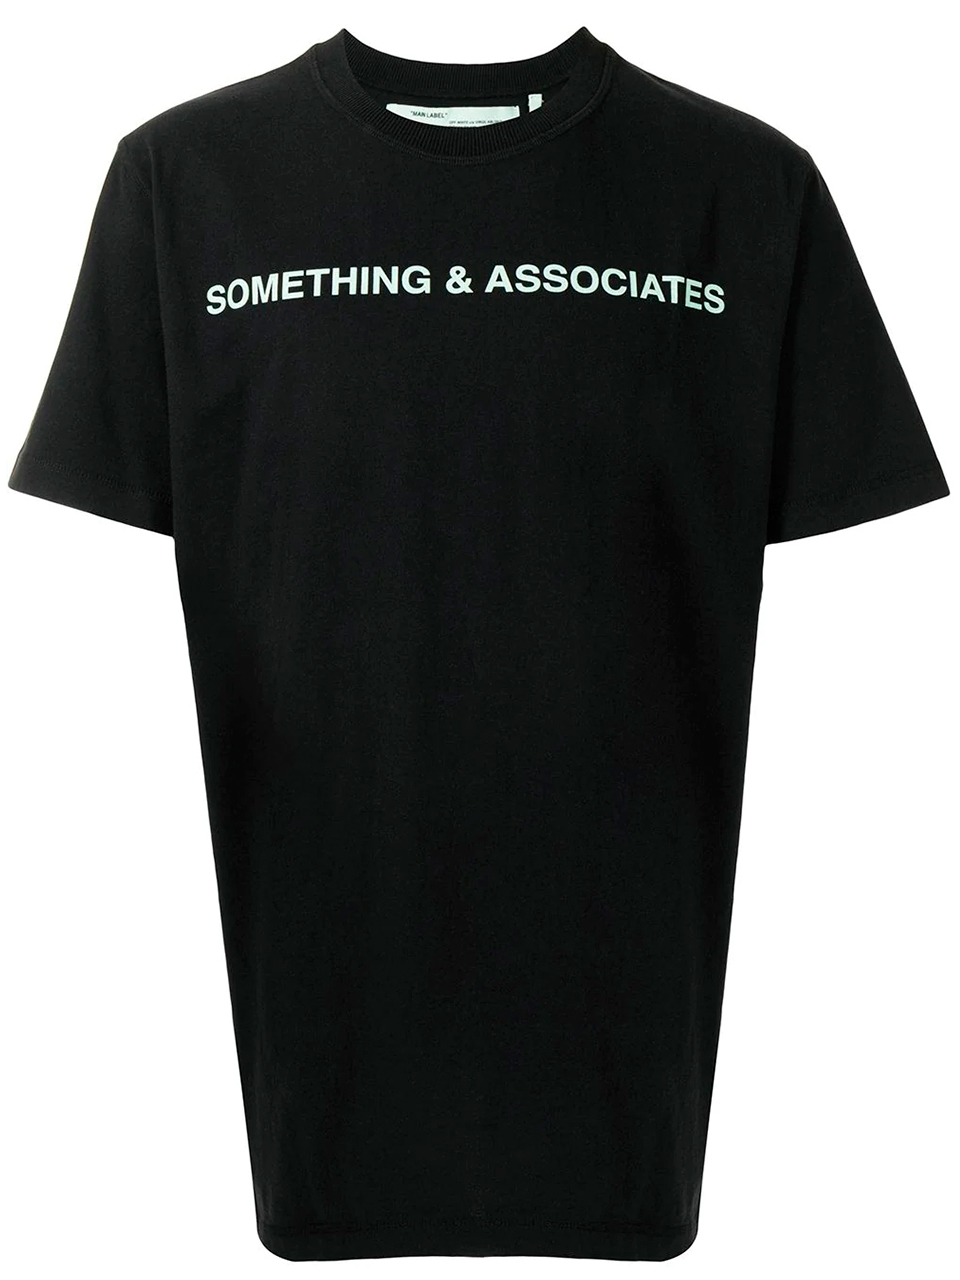 Imagem de: Camiseta Off-White Something & Associates Preta